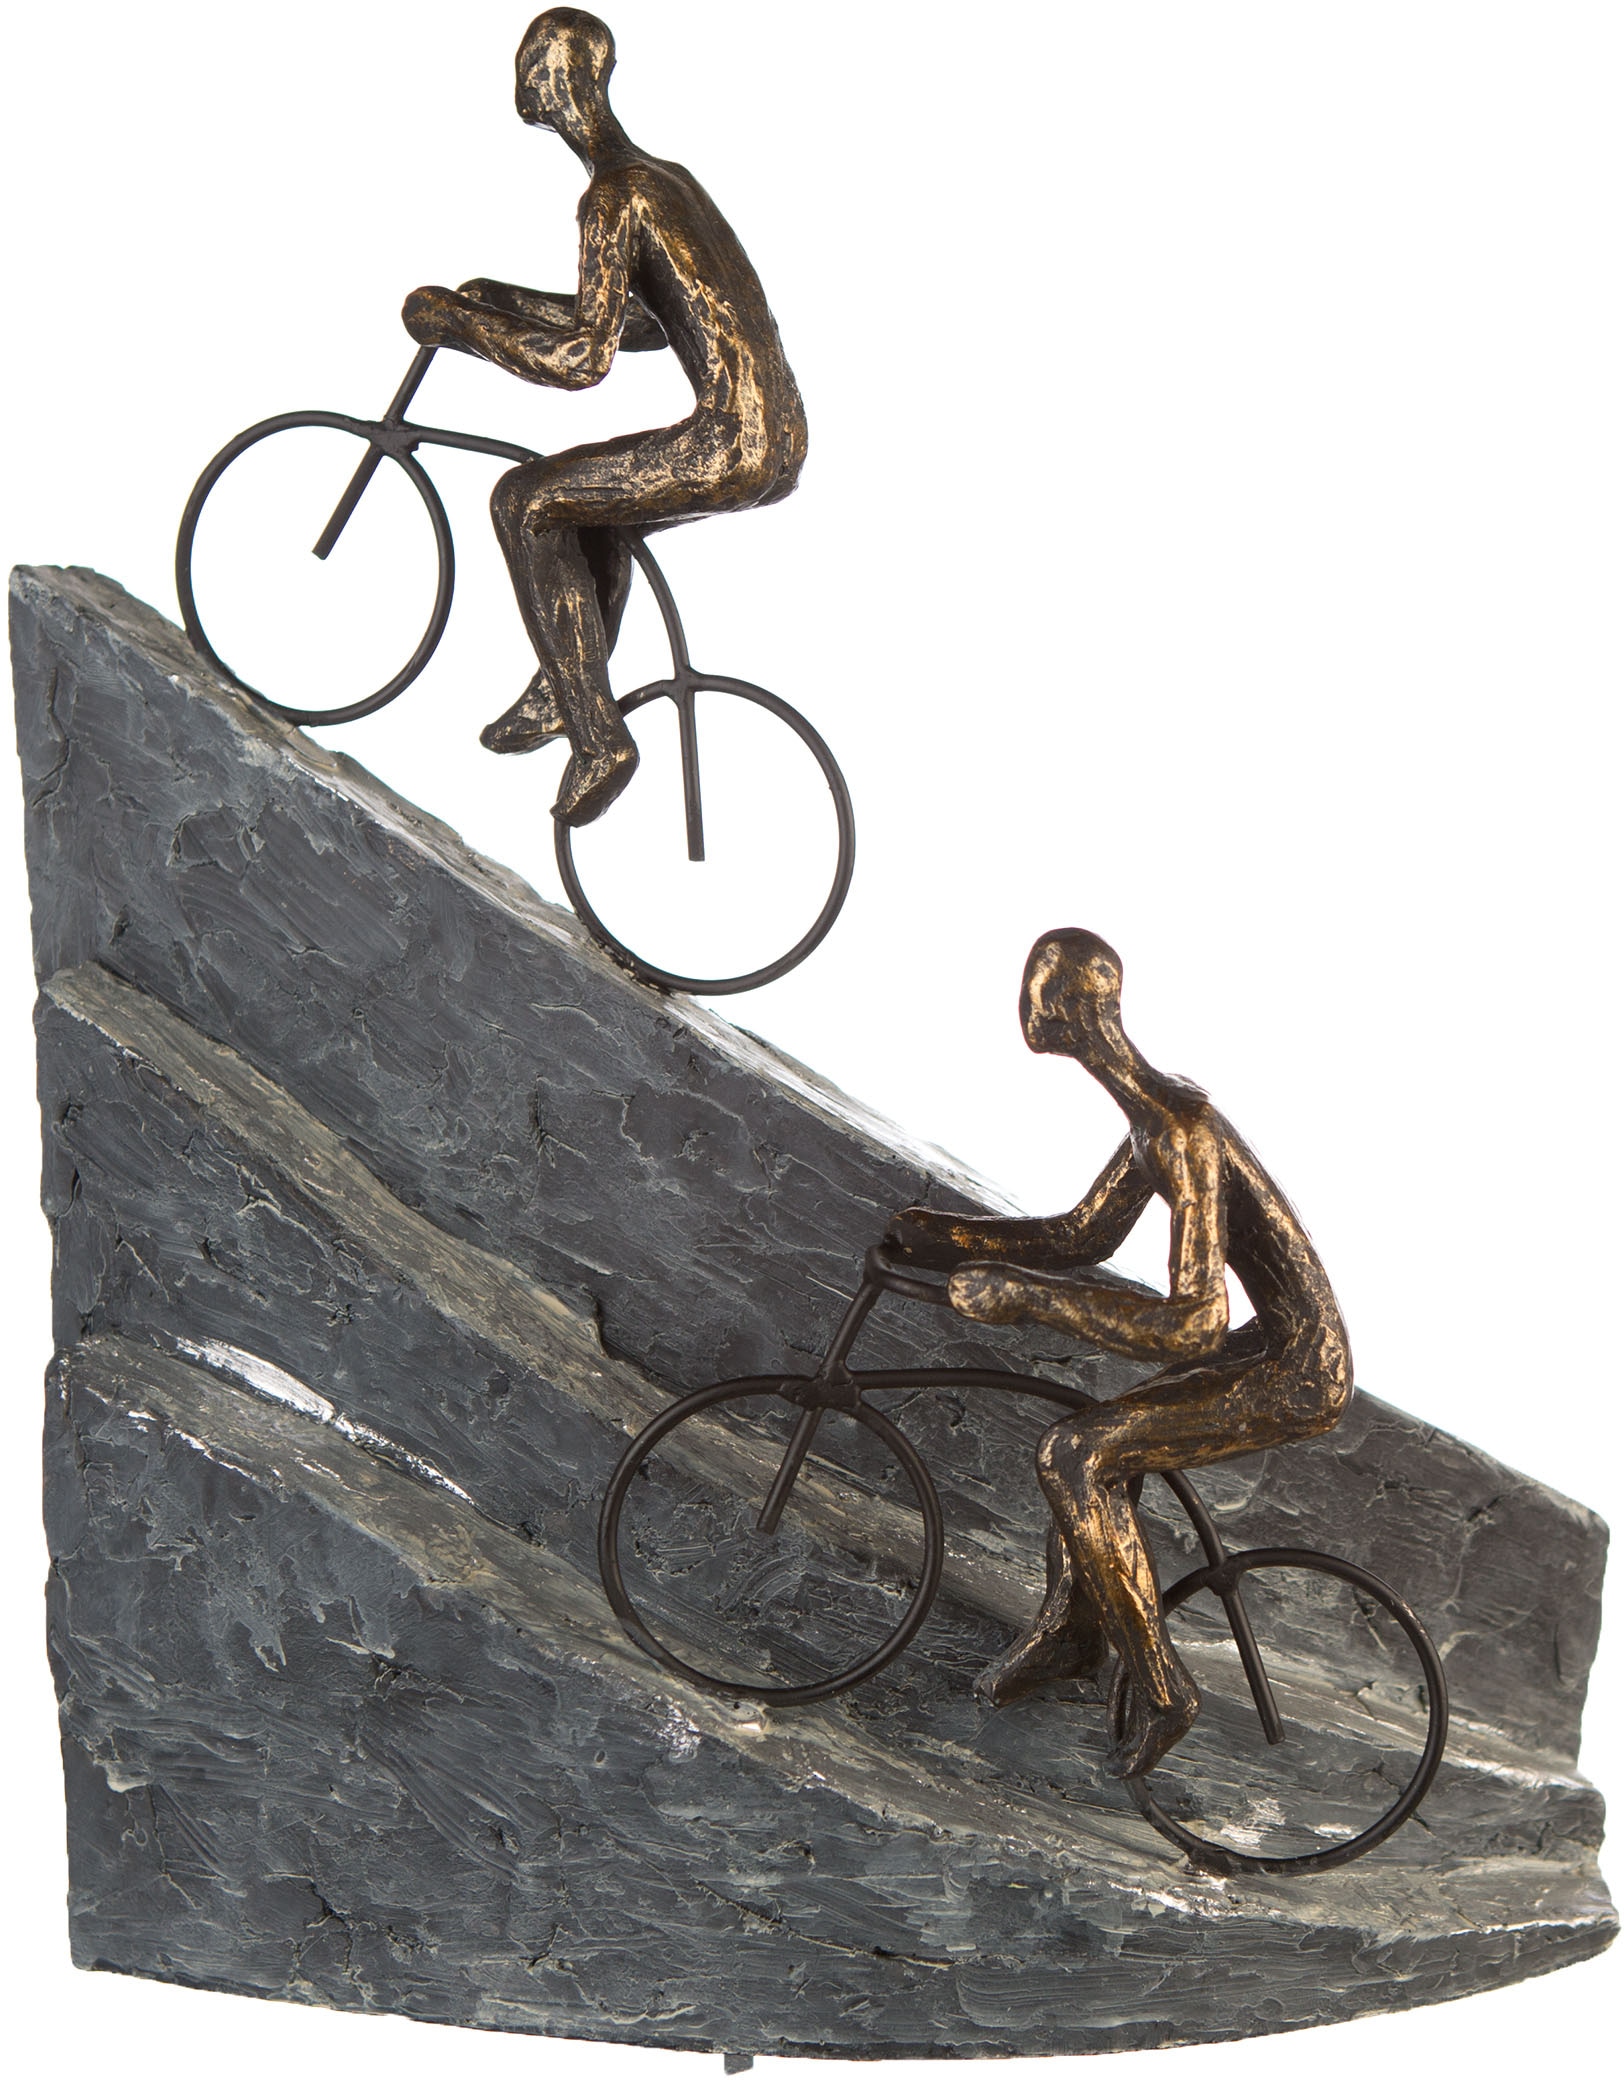 Racing, Gilde bronzefarben/grau, Casablanca »Skulptur Polyresin Dekofigur bronzefarben/grau«, by